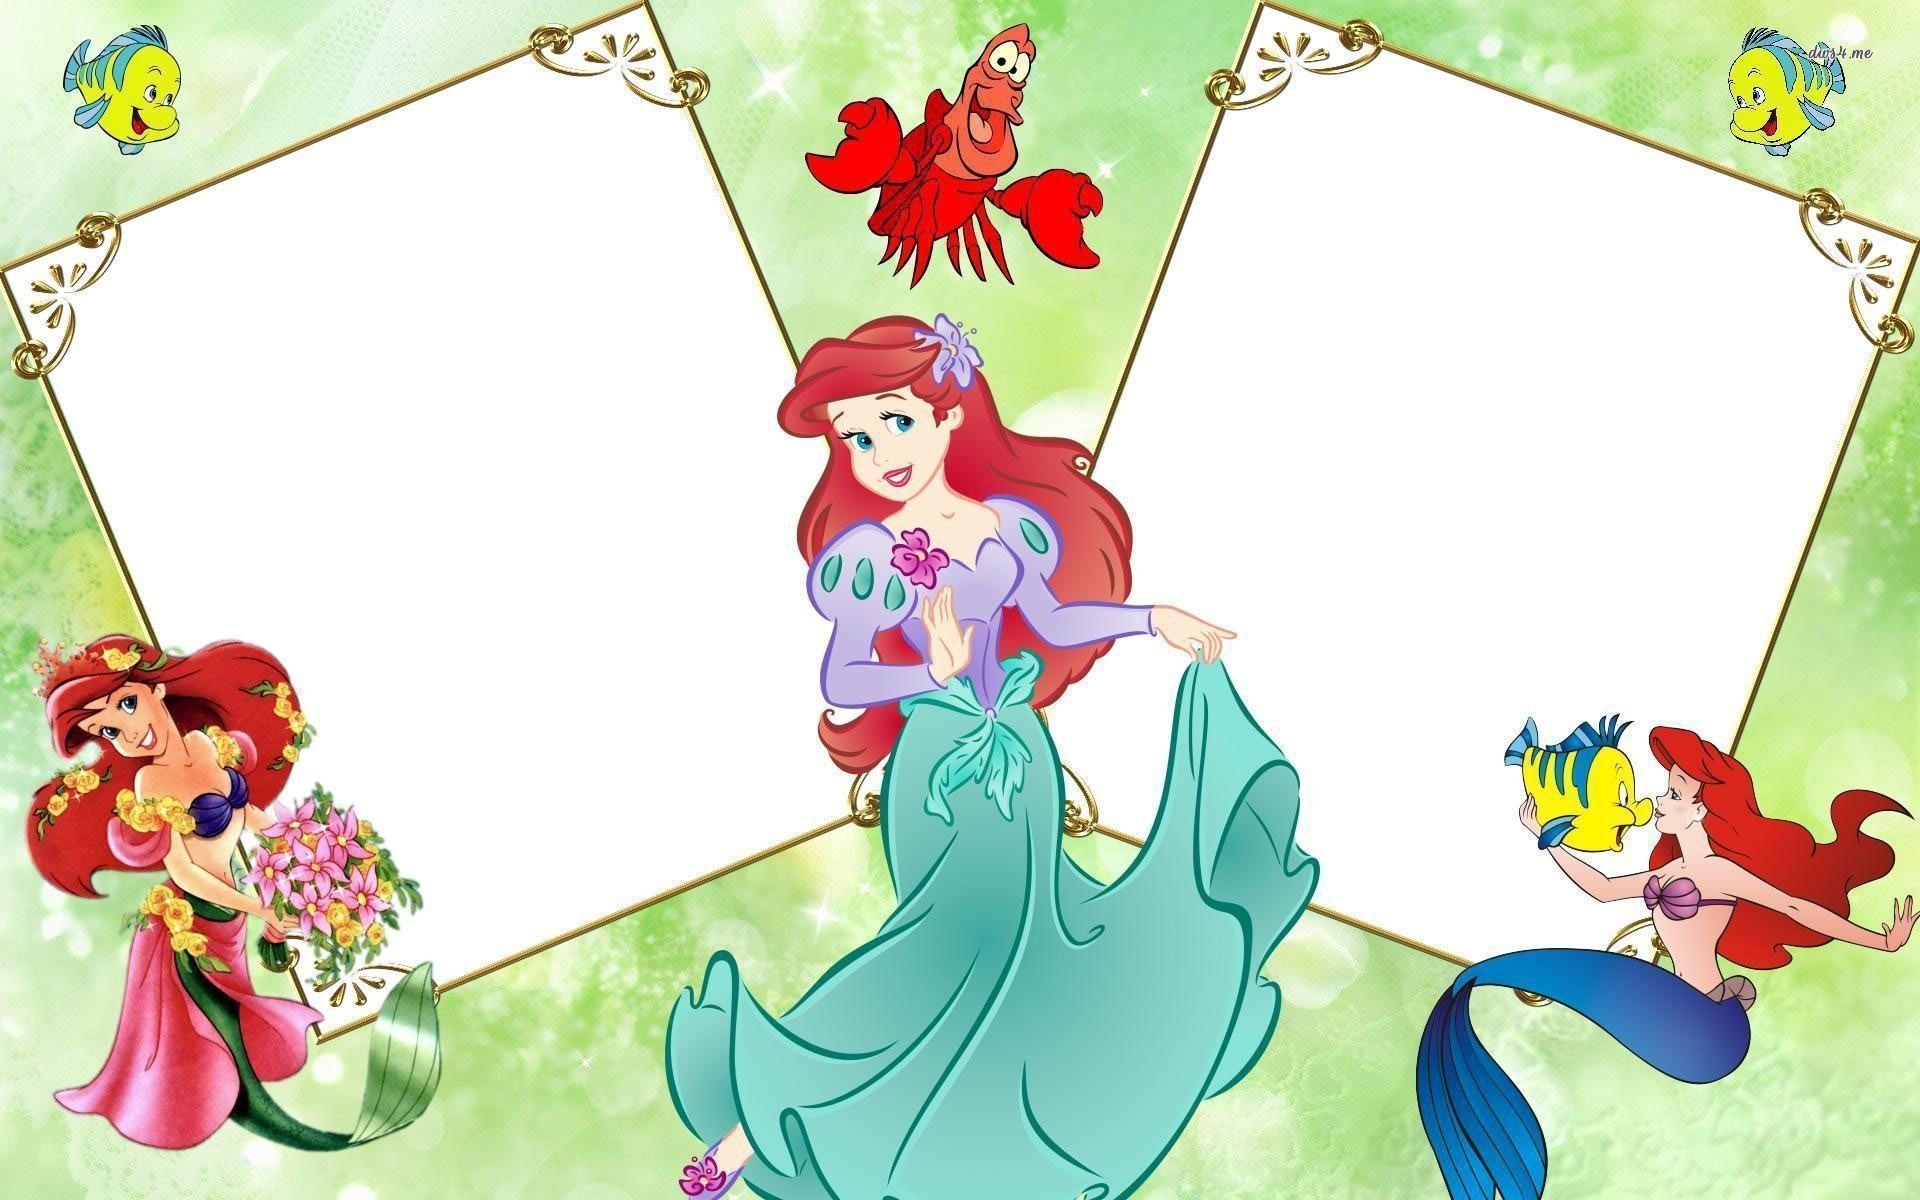 The Little Mermaid Wallpaper